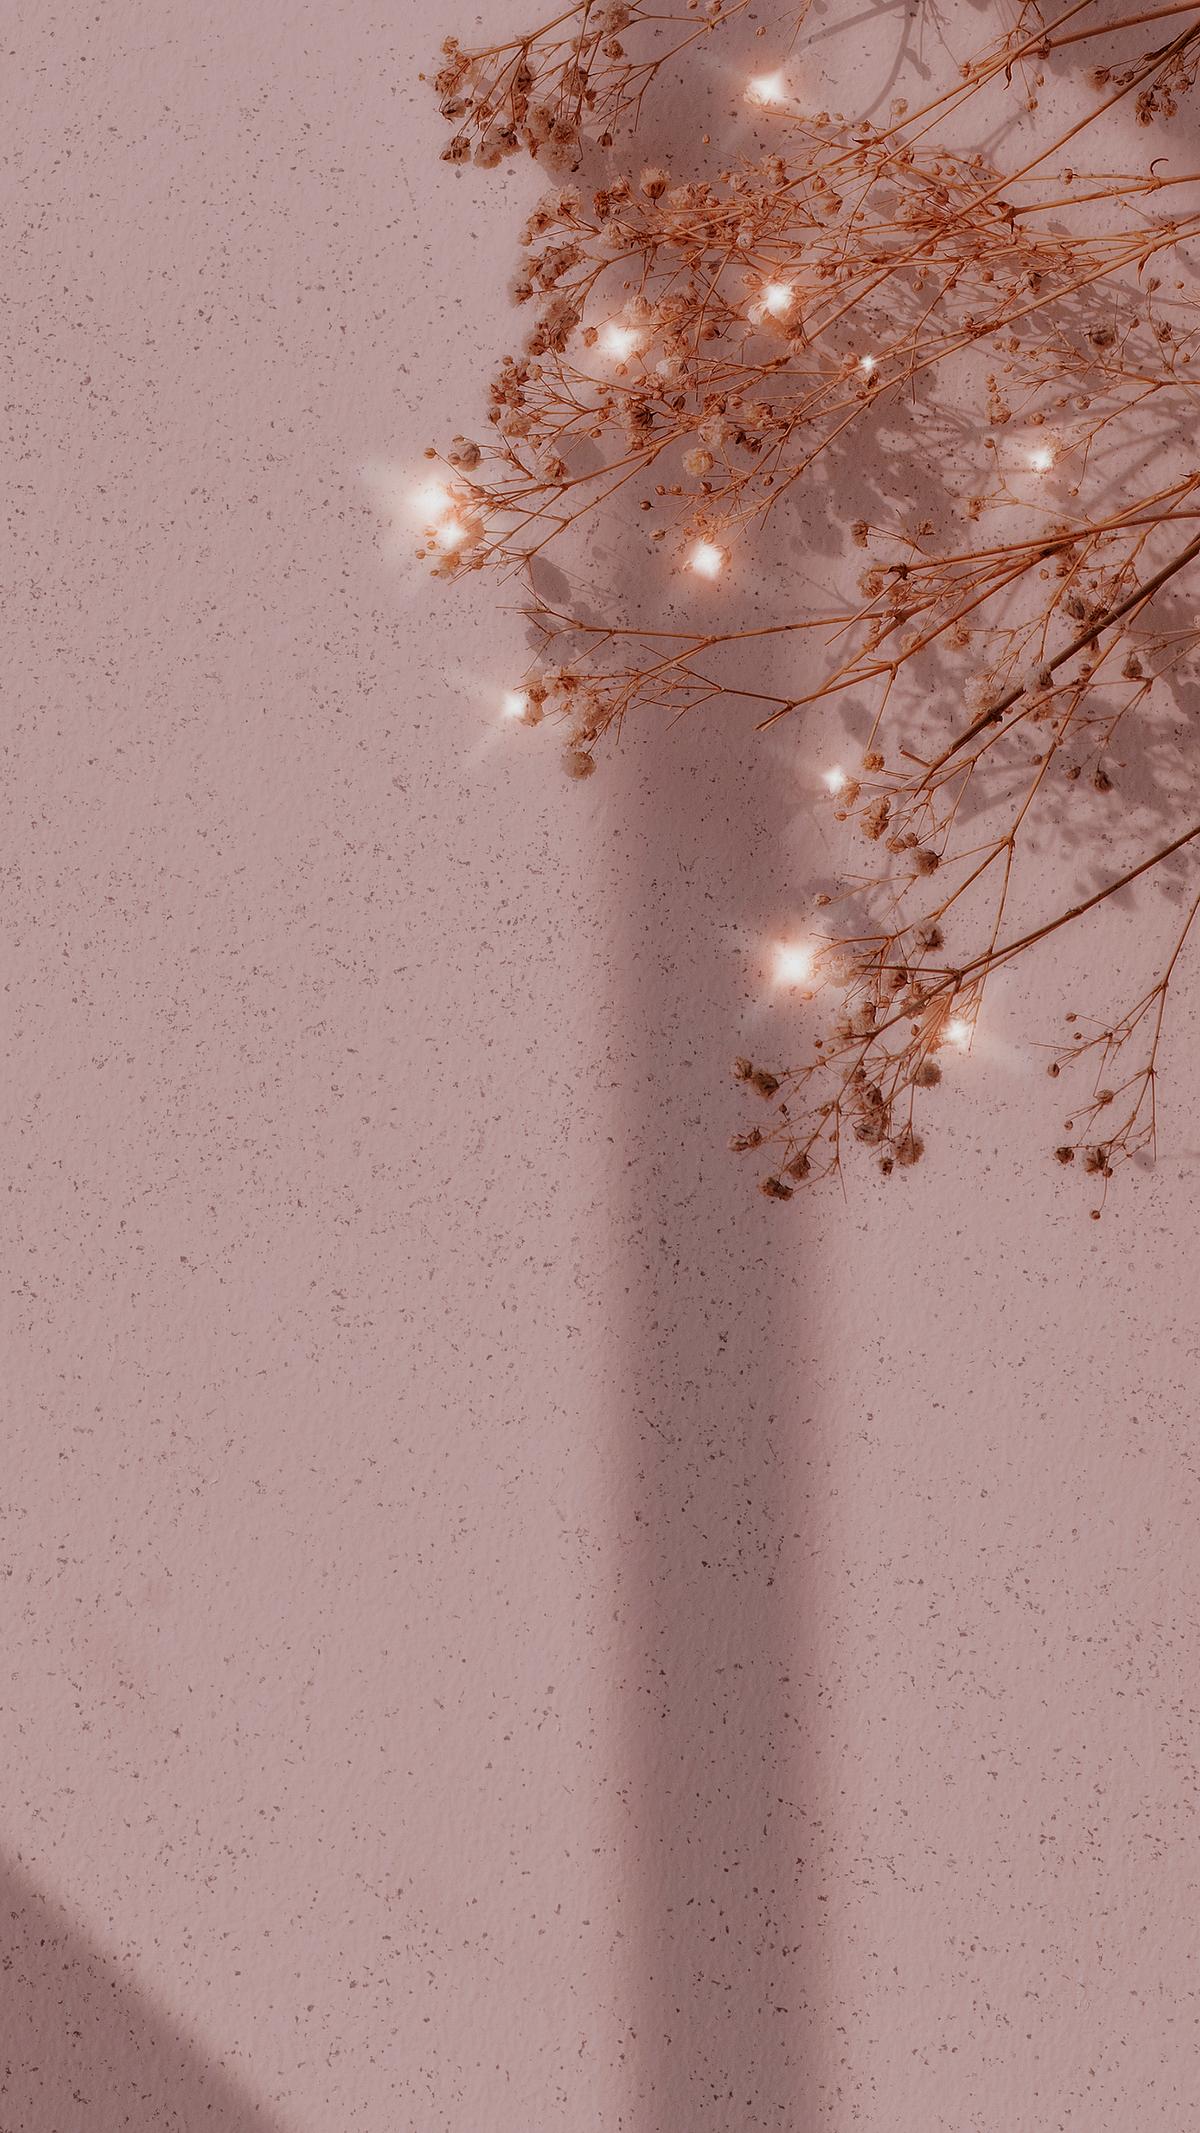 Sparkle dried flower background image | Premium Photo - rawpixel